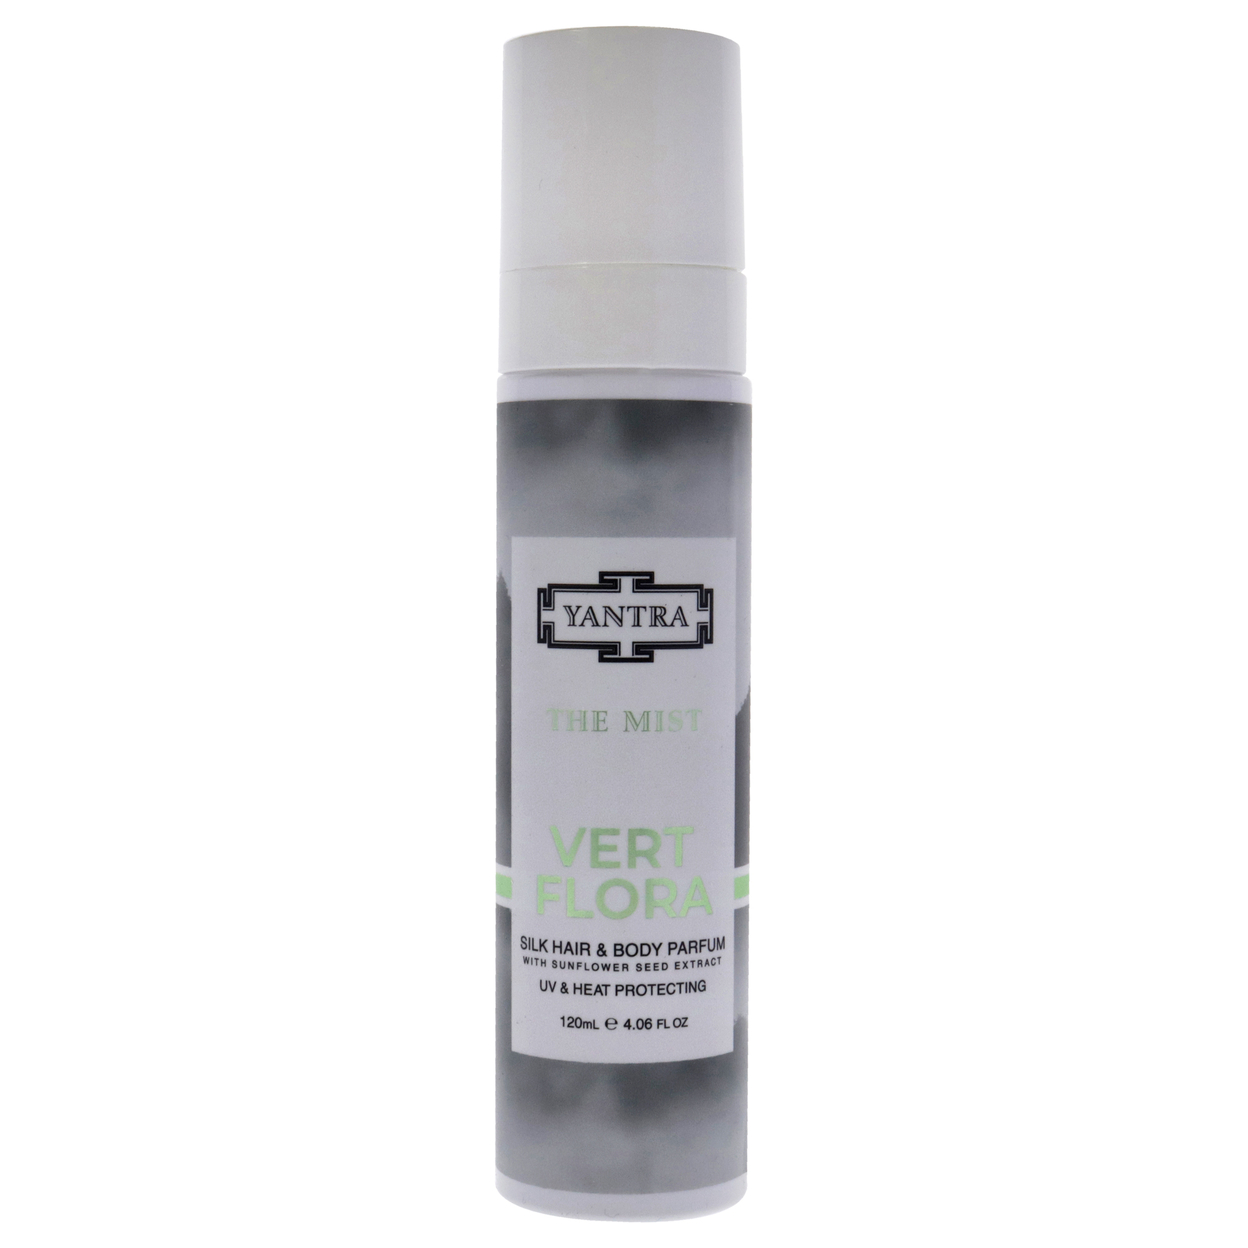 Yantra The Mist Vert Flora Silk Hair And Body Parfum Body Mist 4.06 Oz